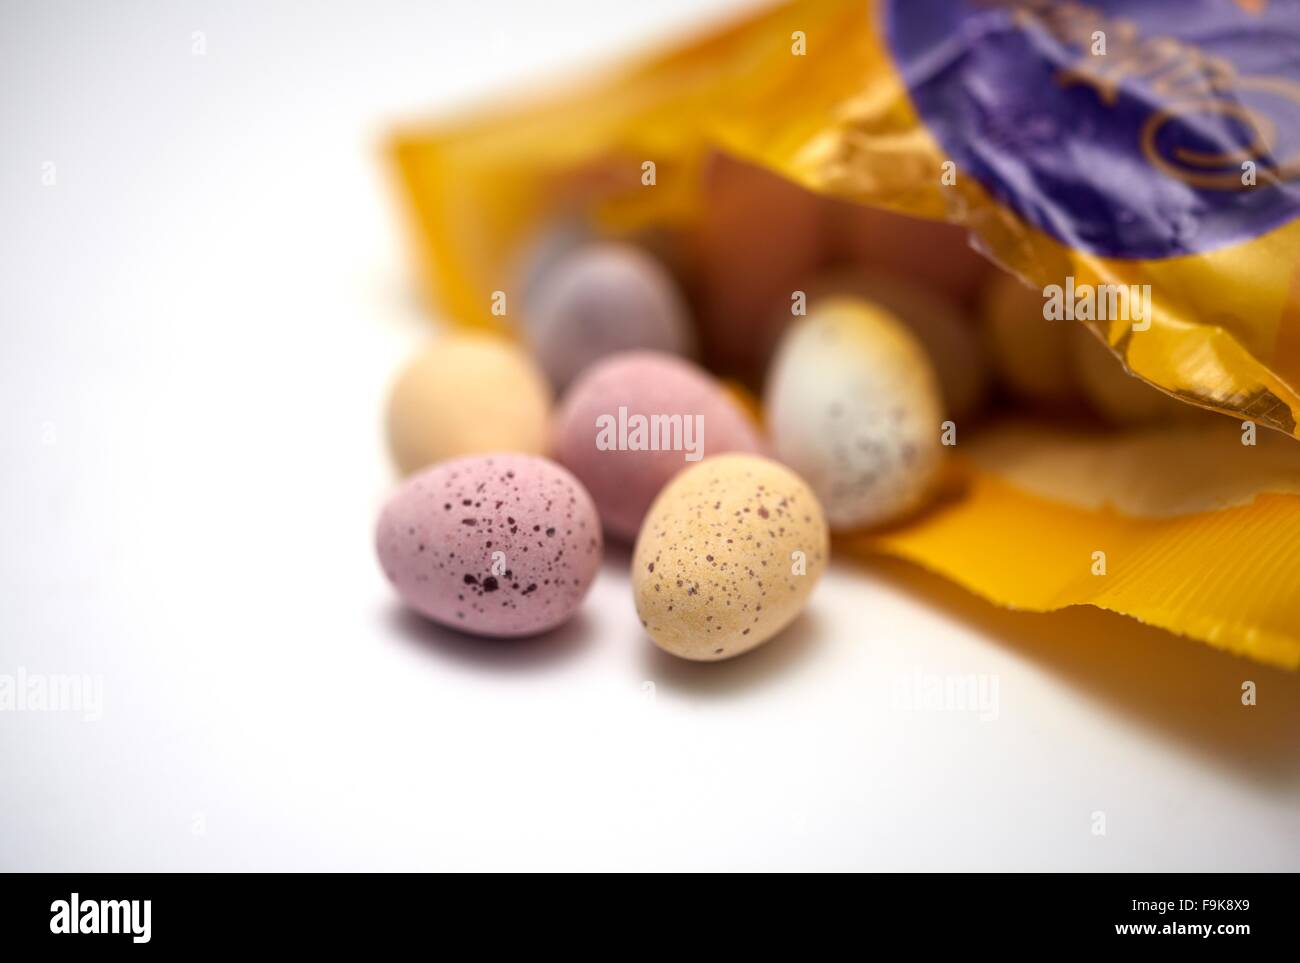 Cadburys mini eggs close up macro image Stock Photo